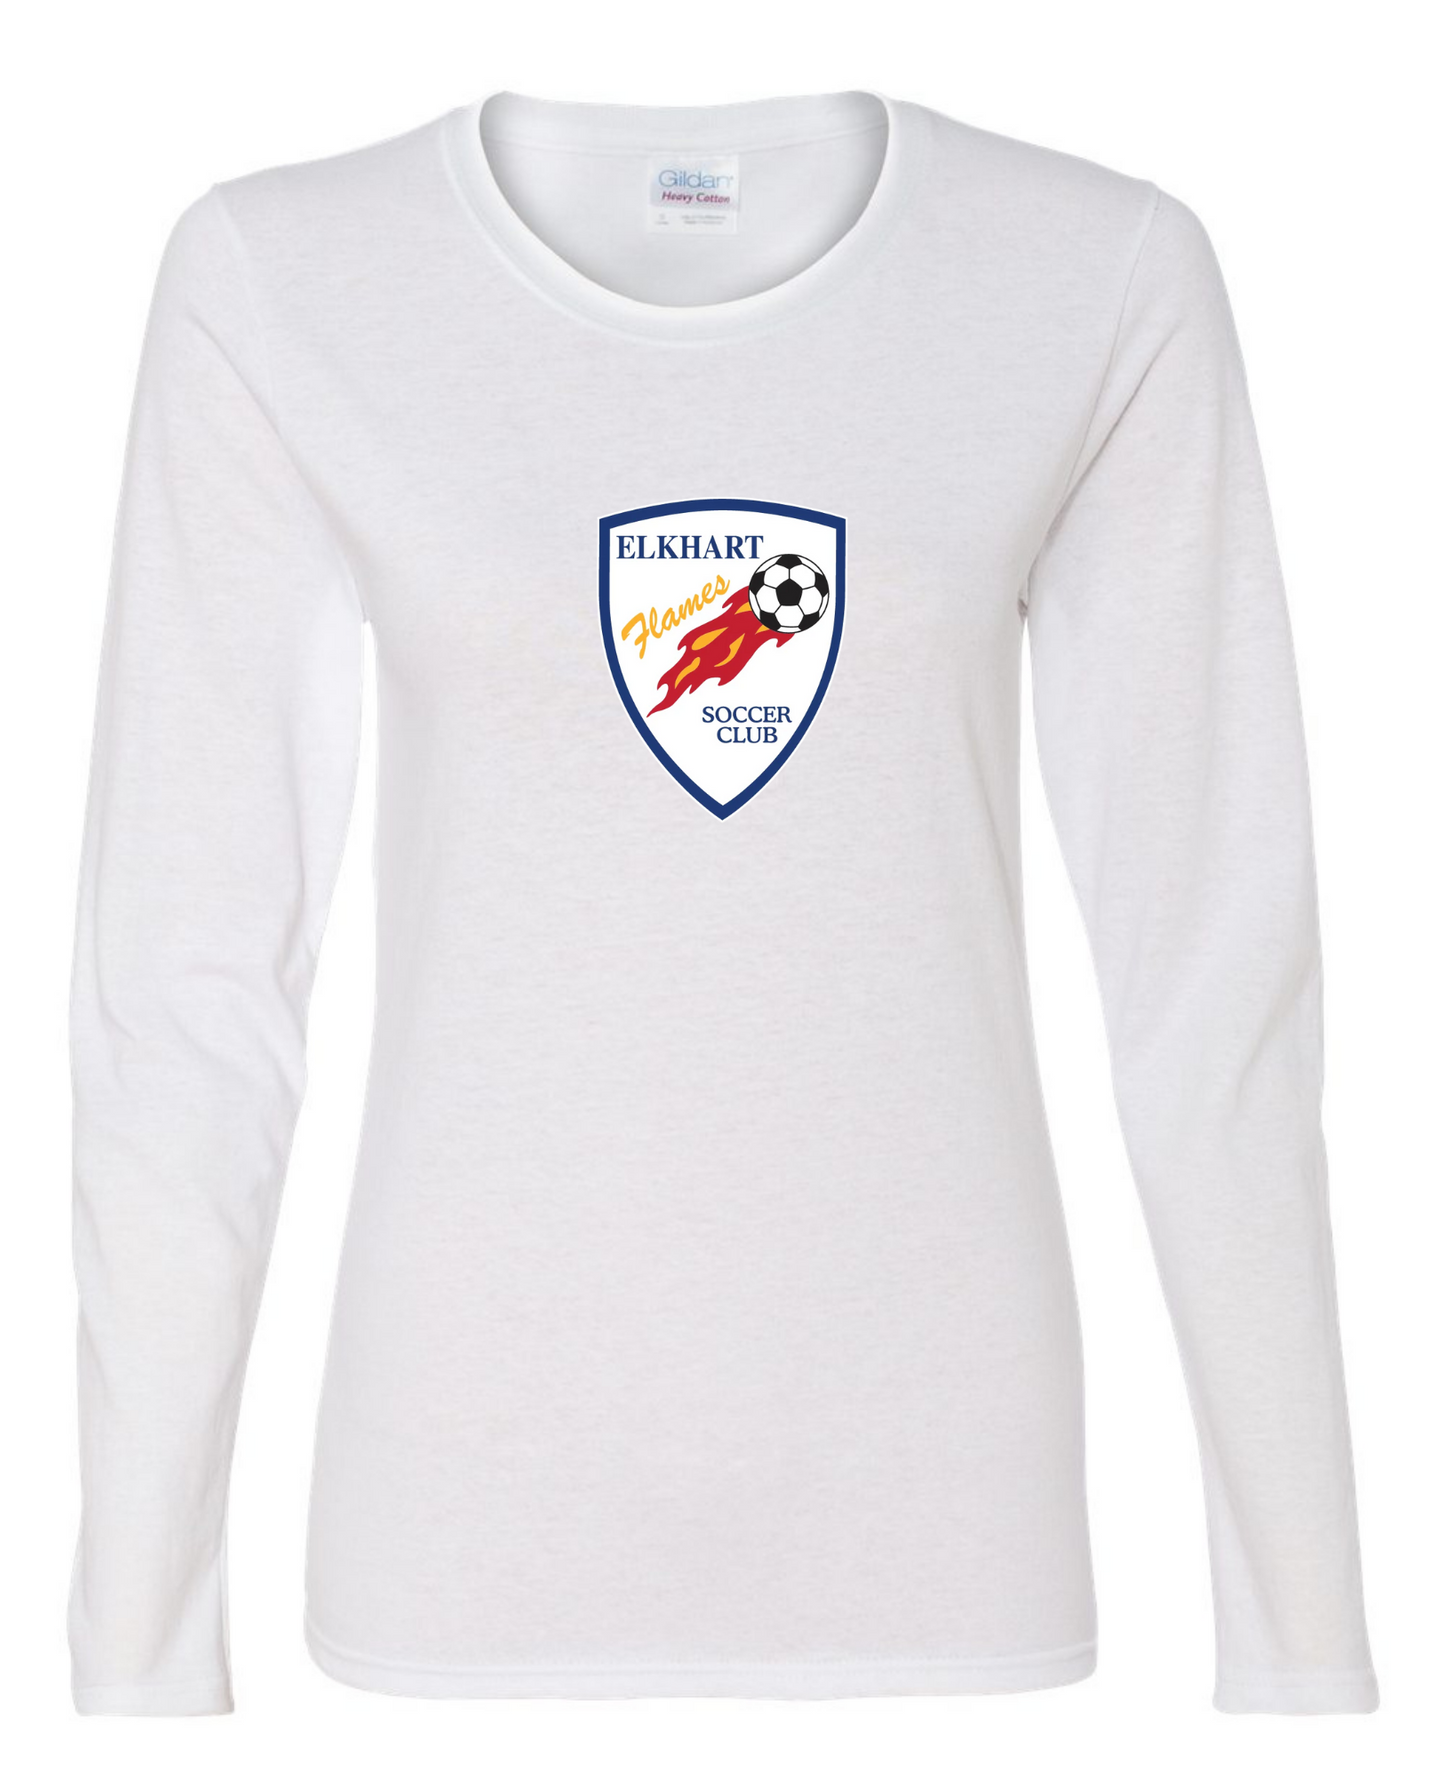 Elkhart Flames Soccer Club Logo Long Sleeve Tee - Women's